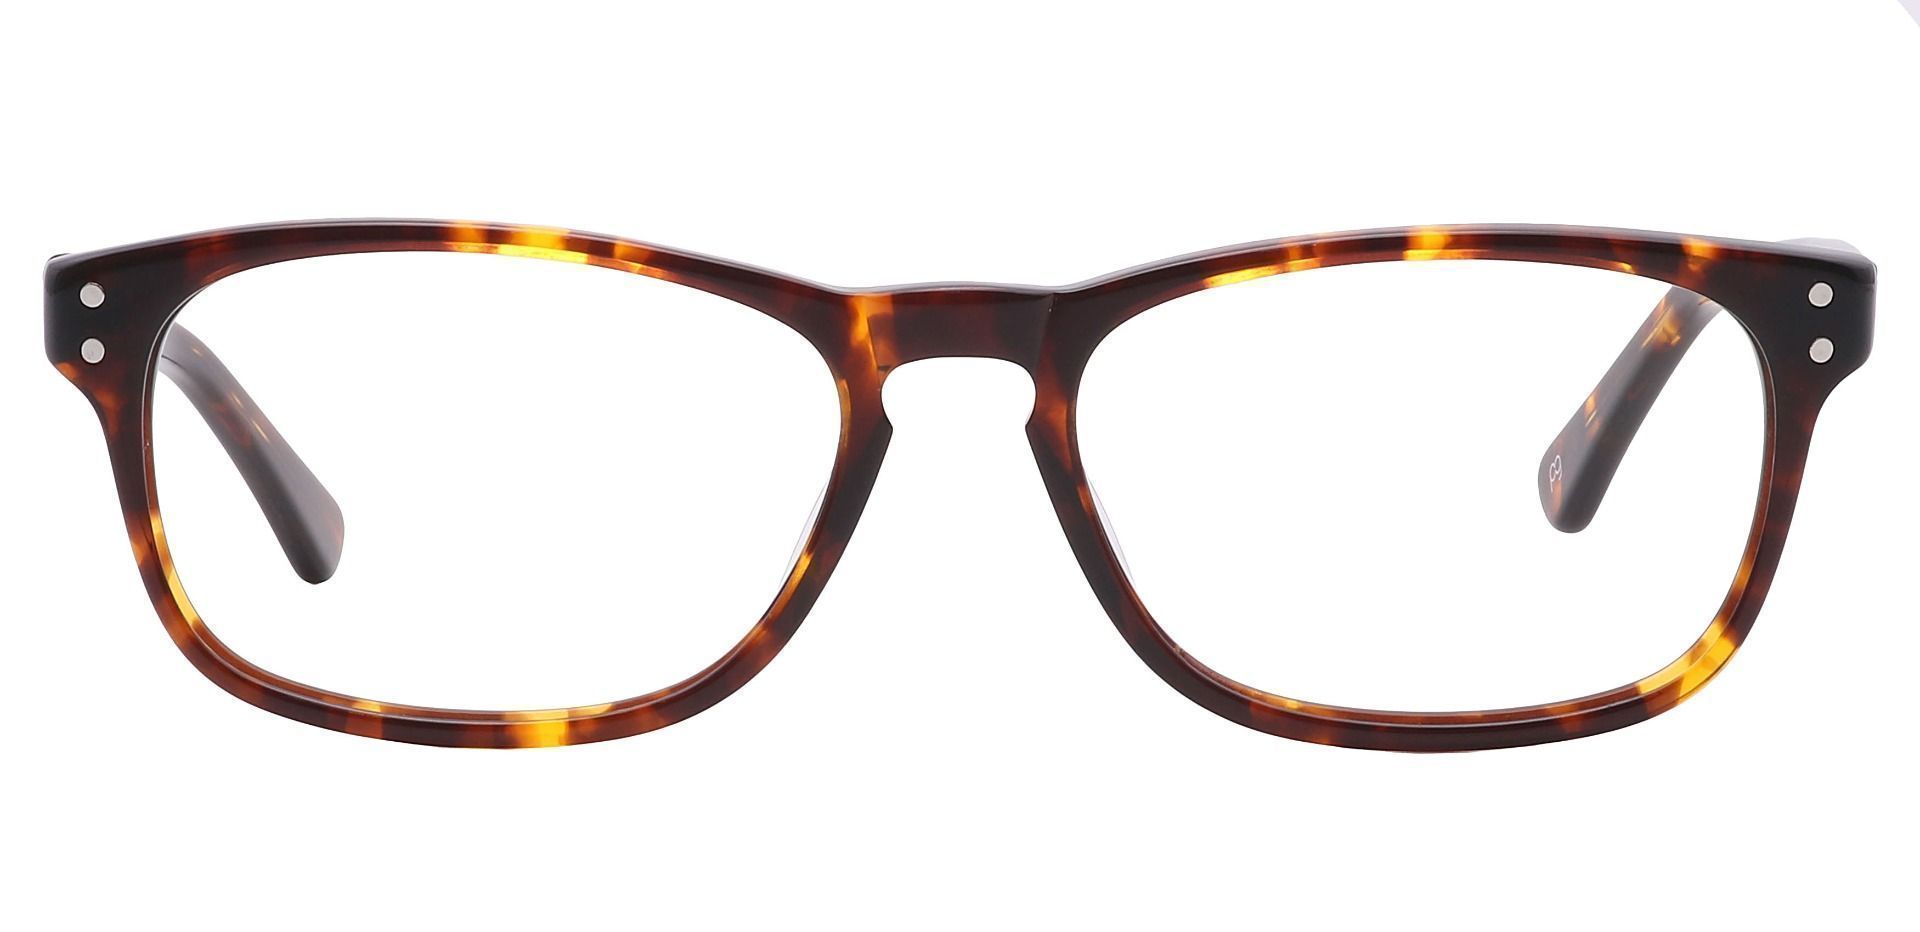 Morris Rectangle Progressive Glasses - Tortoise